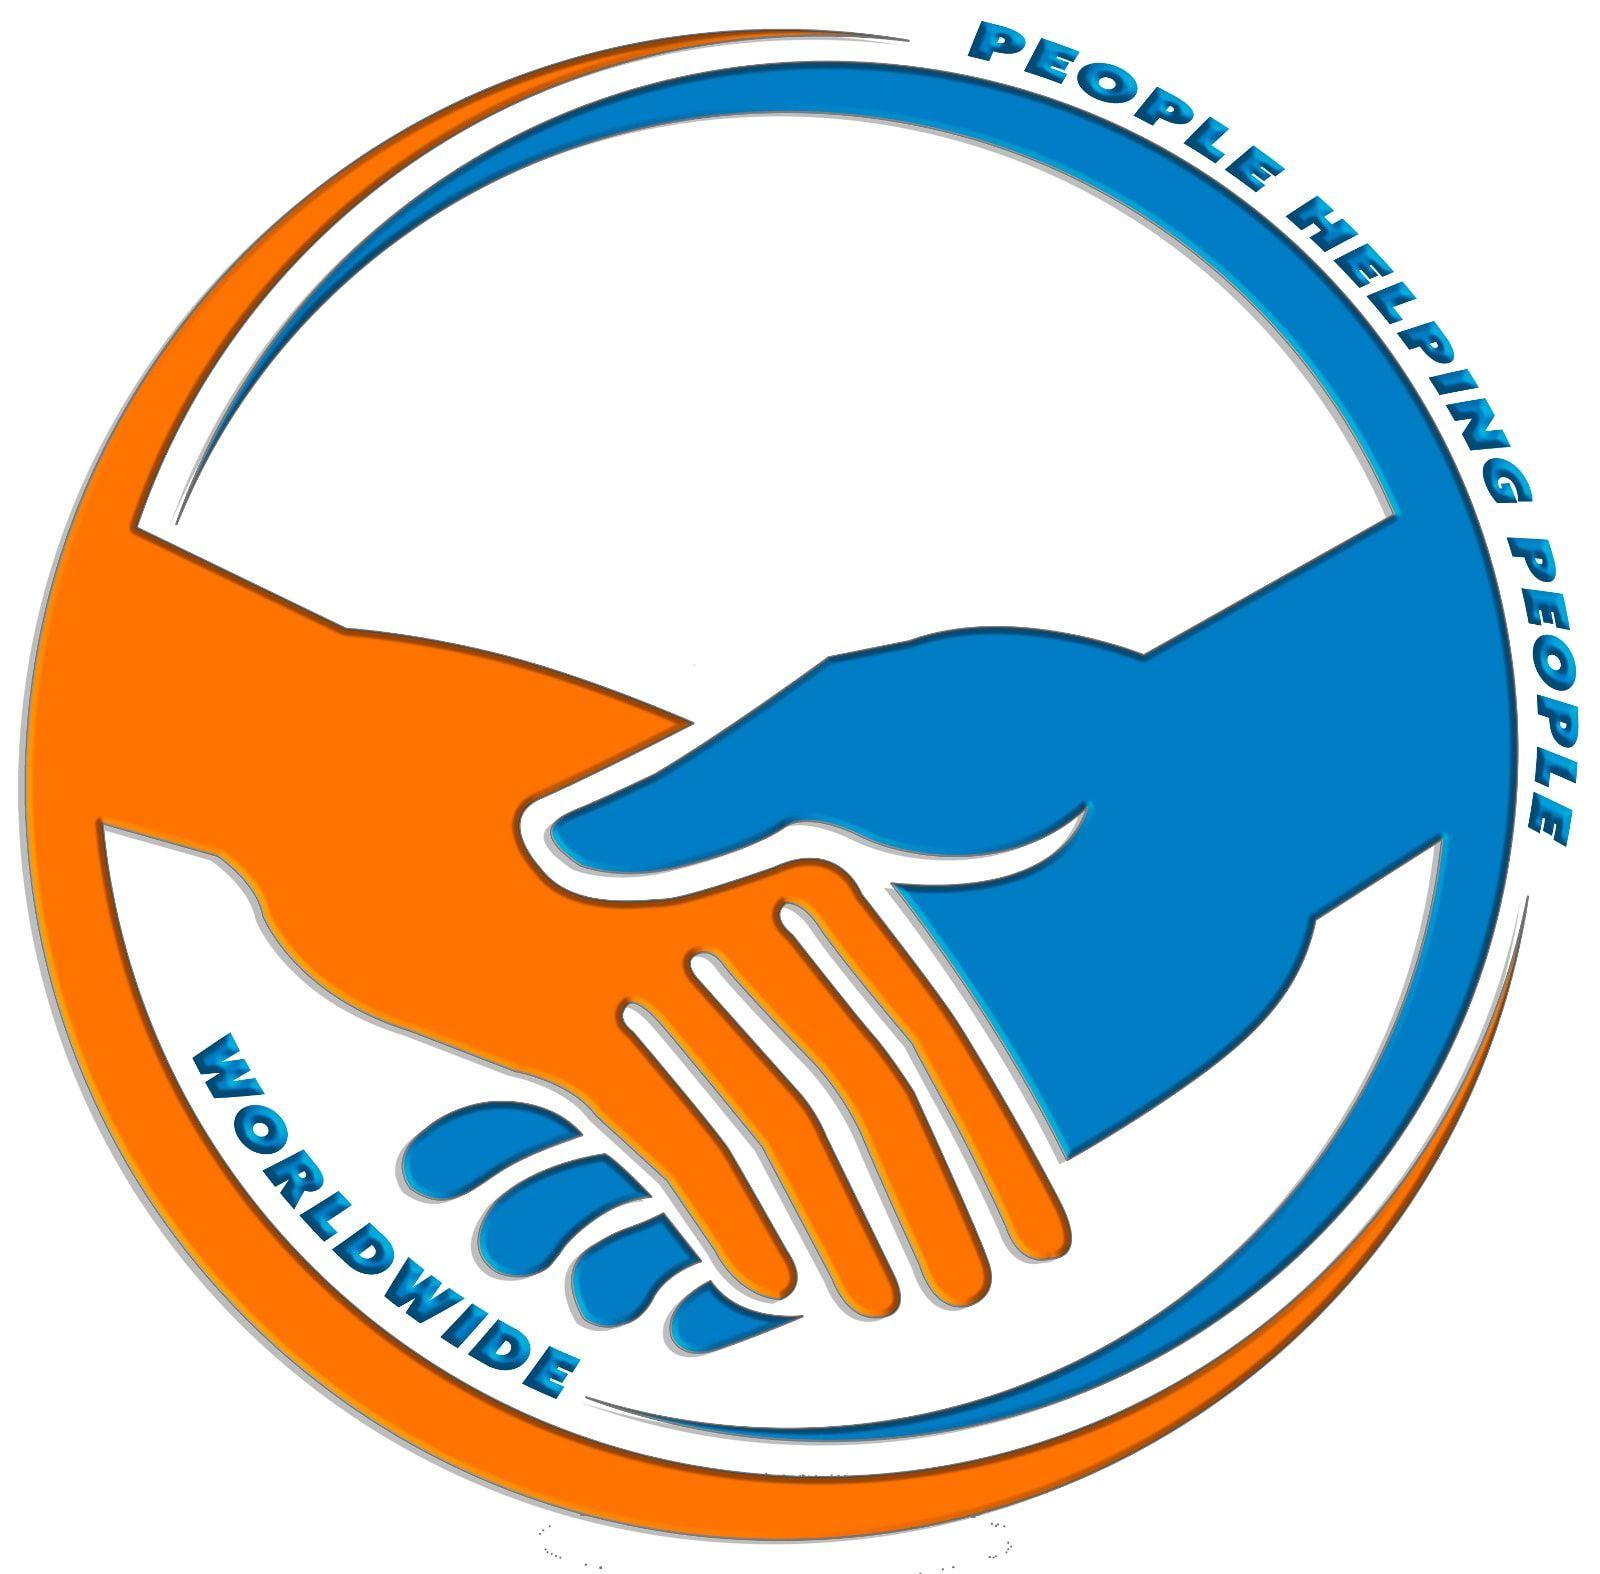 People Helping People Logo - Compensation Plan. People Helping People Worldwide